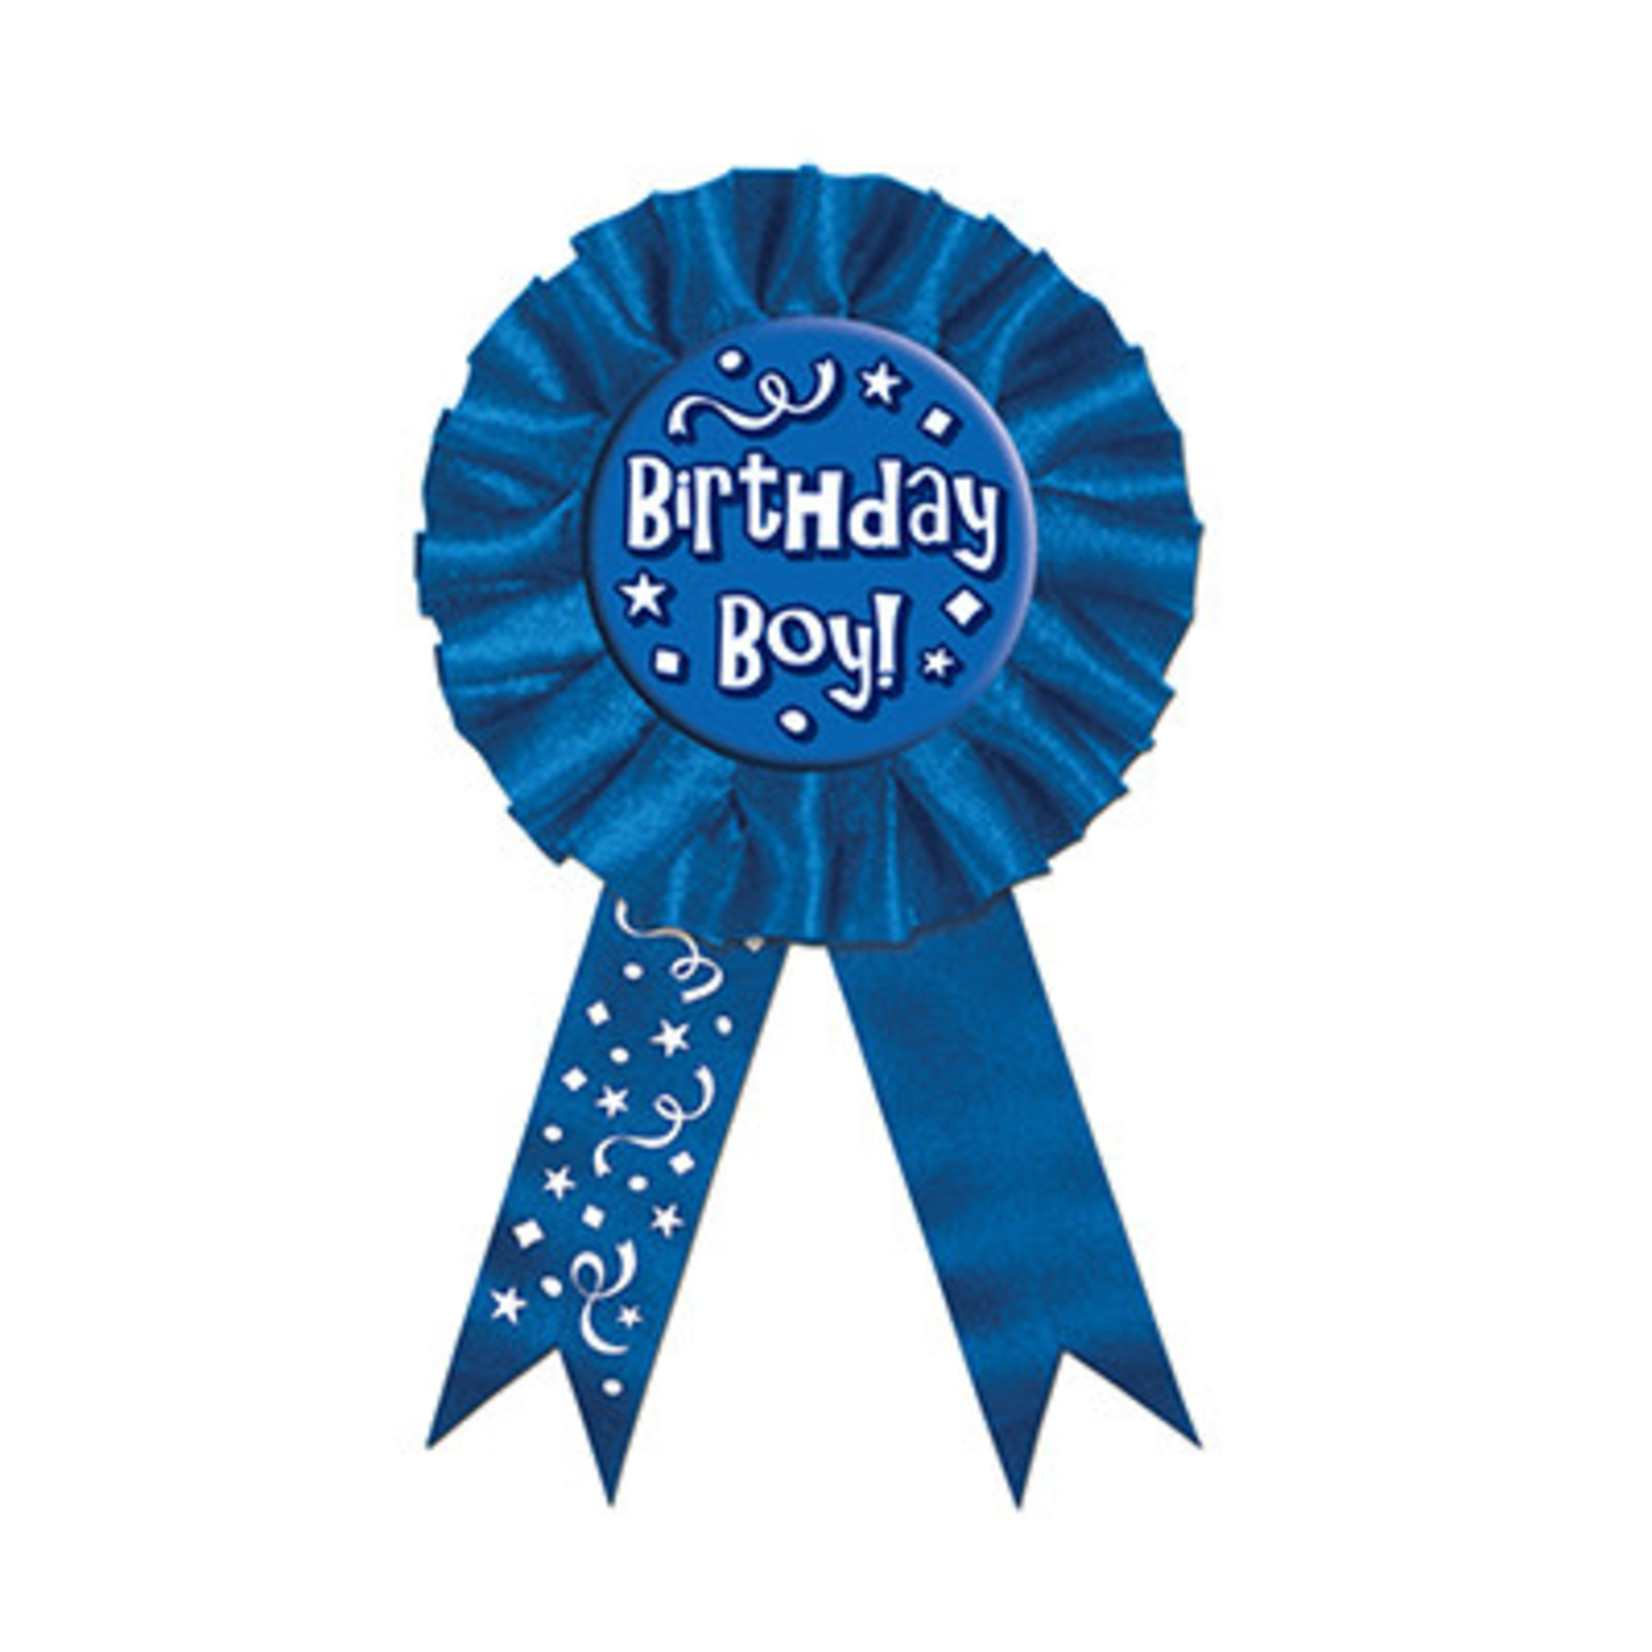 Beistle Birthday Boy! Blue Award Ribbon - 1ct.